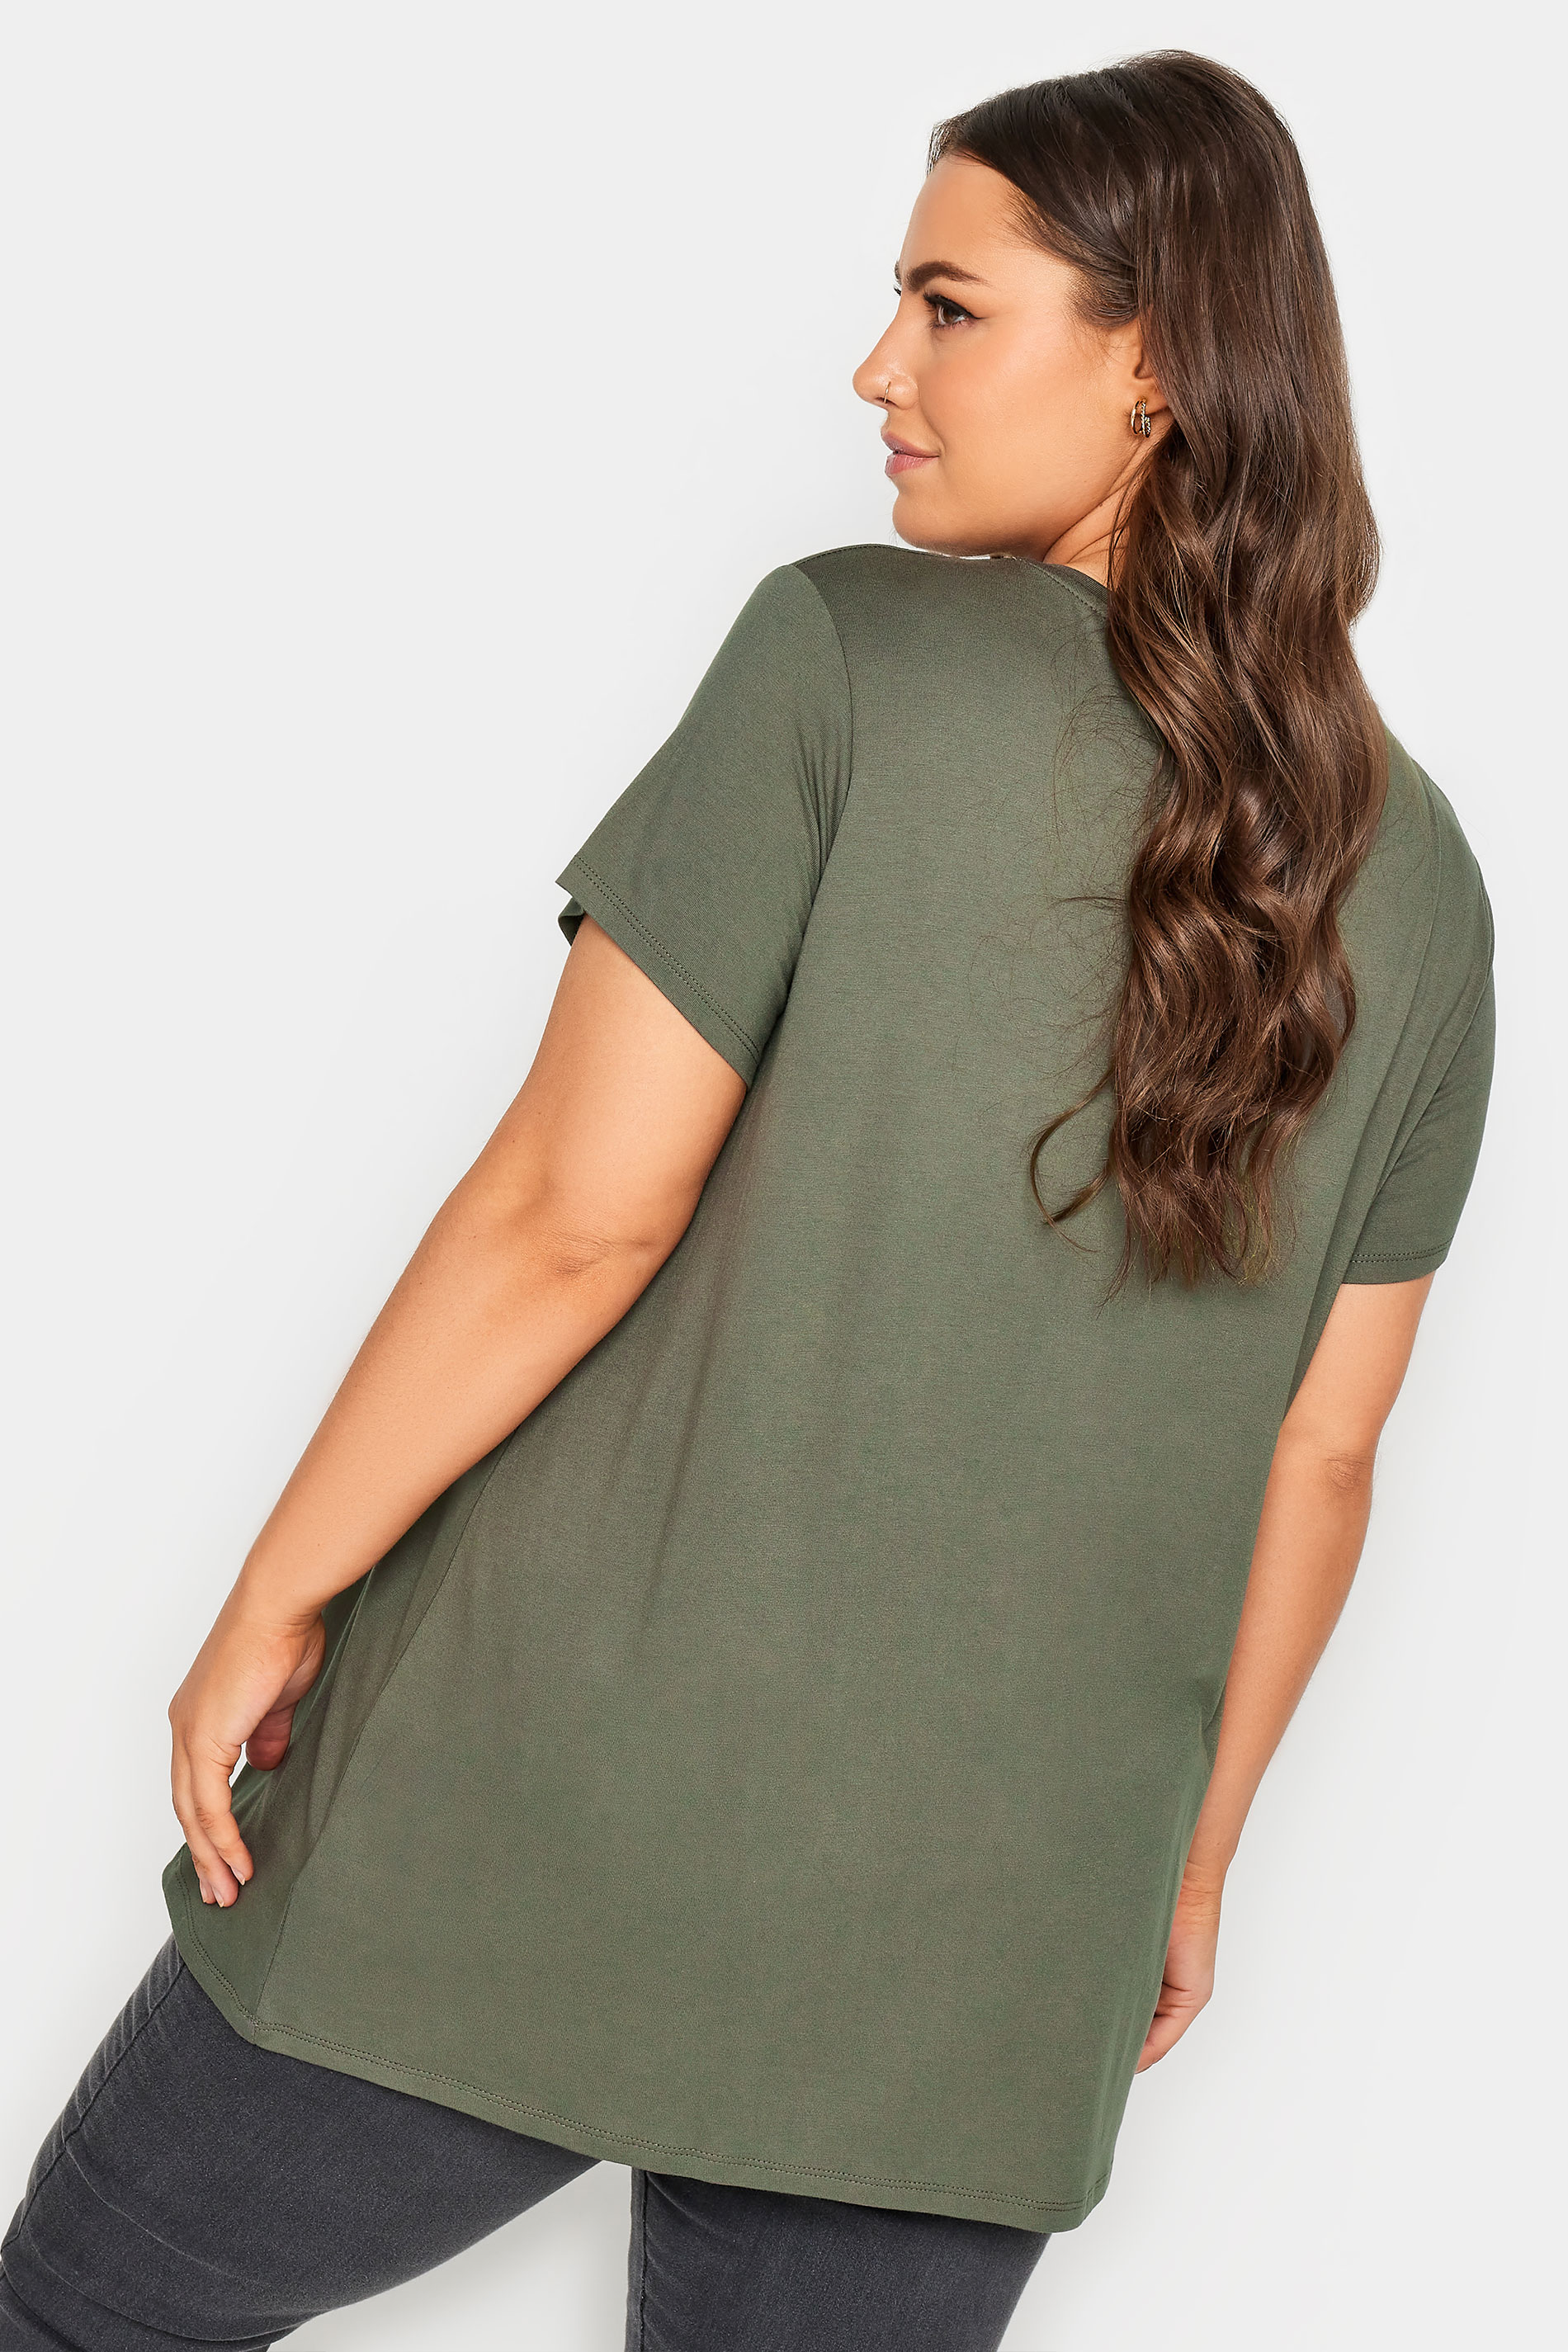 YOURS Plus Size Khaki Green Glitter Heart Print T-Shirt | Yours Clothing  3